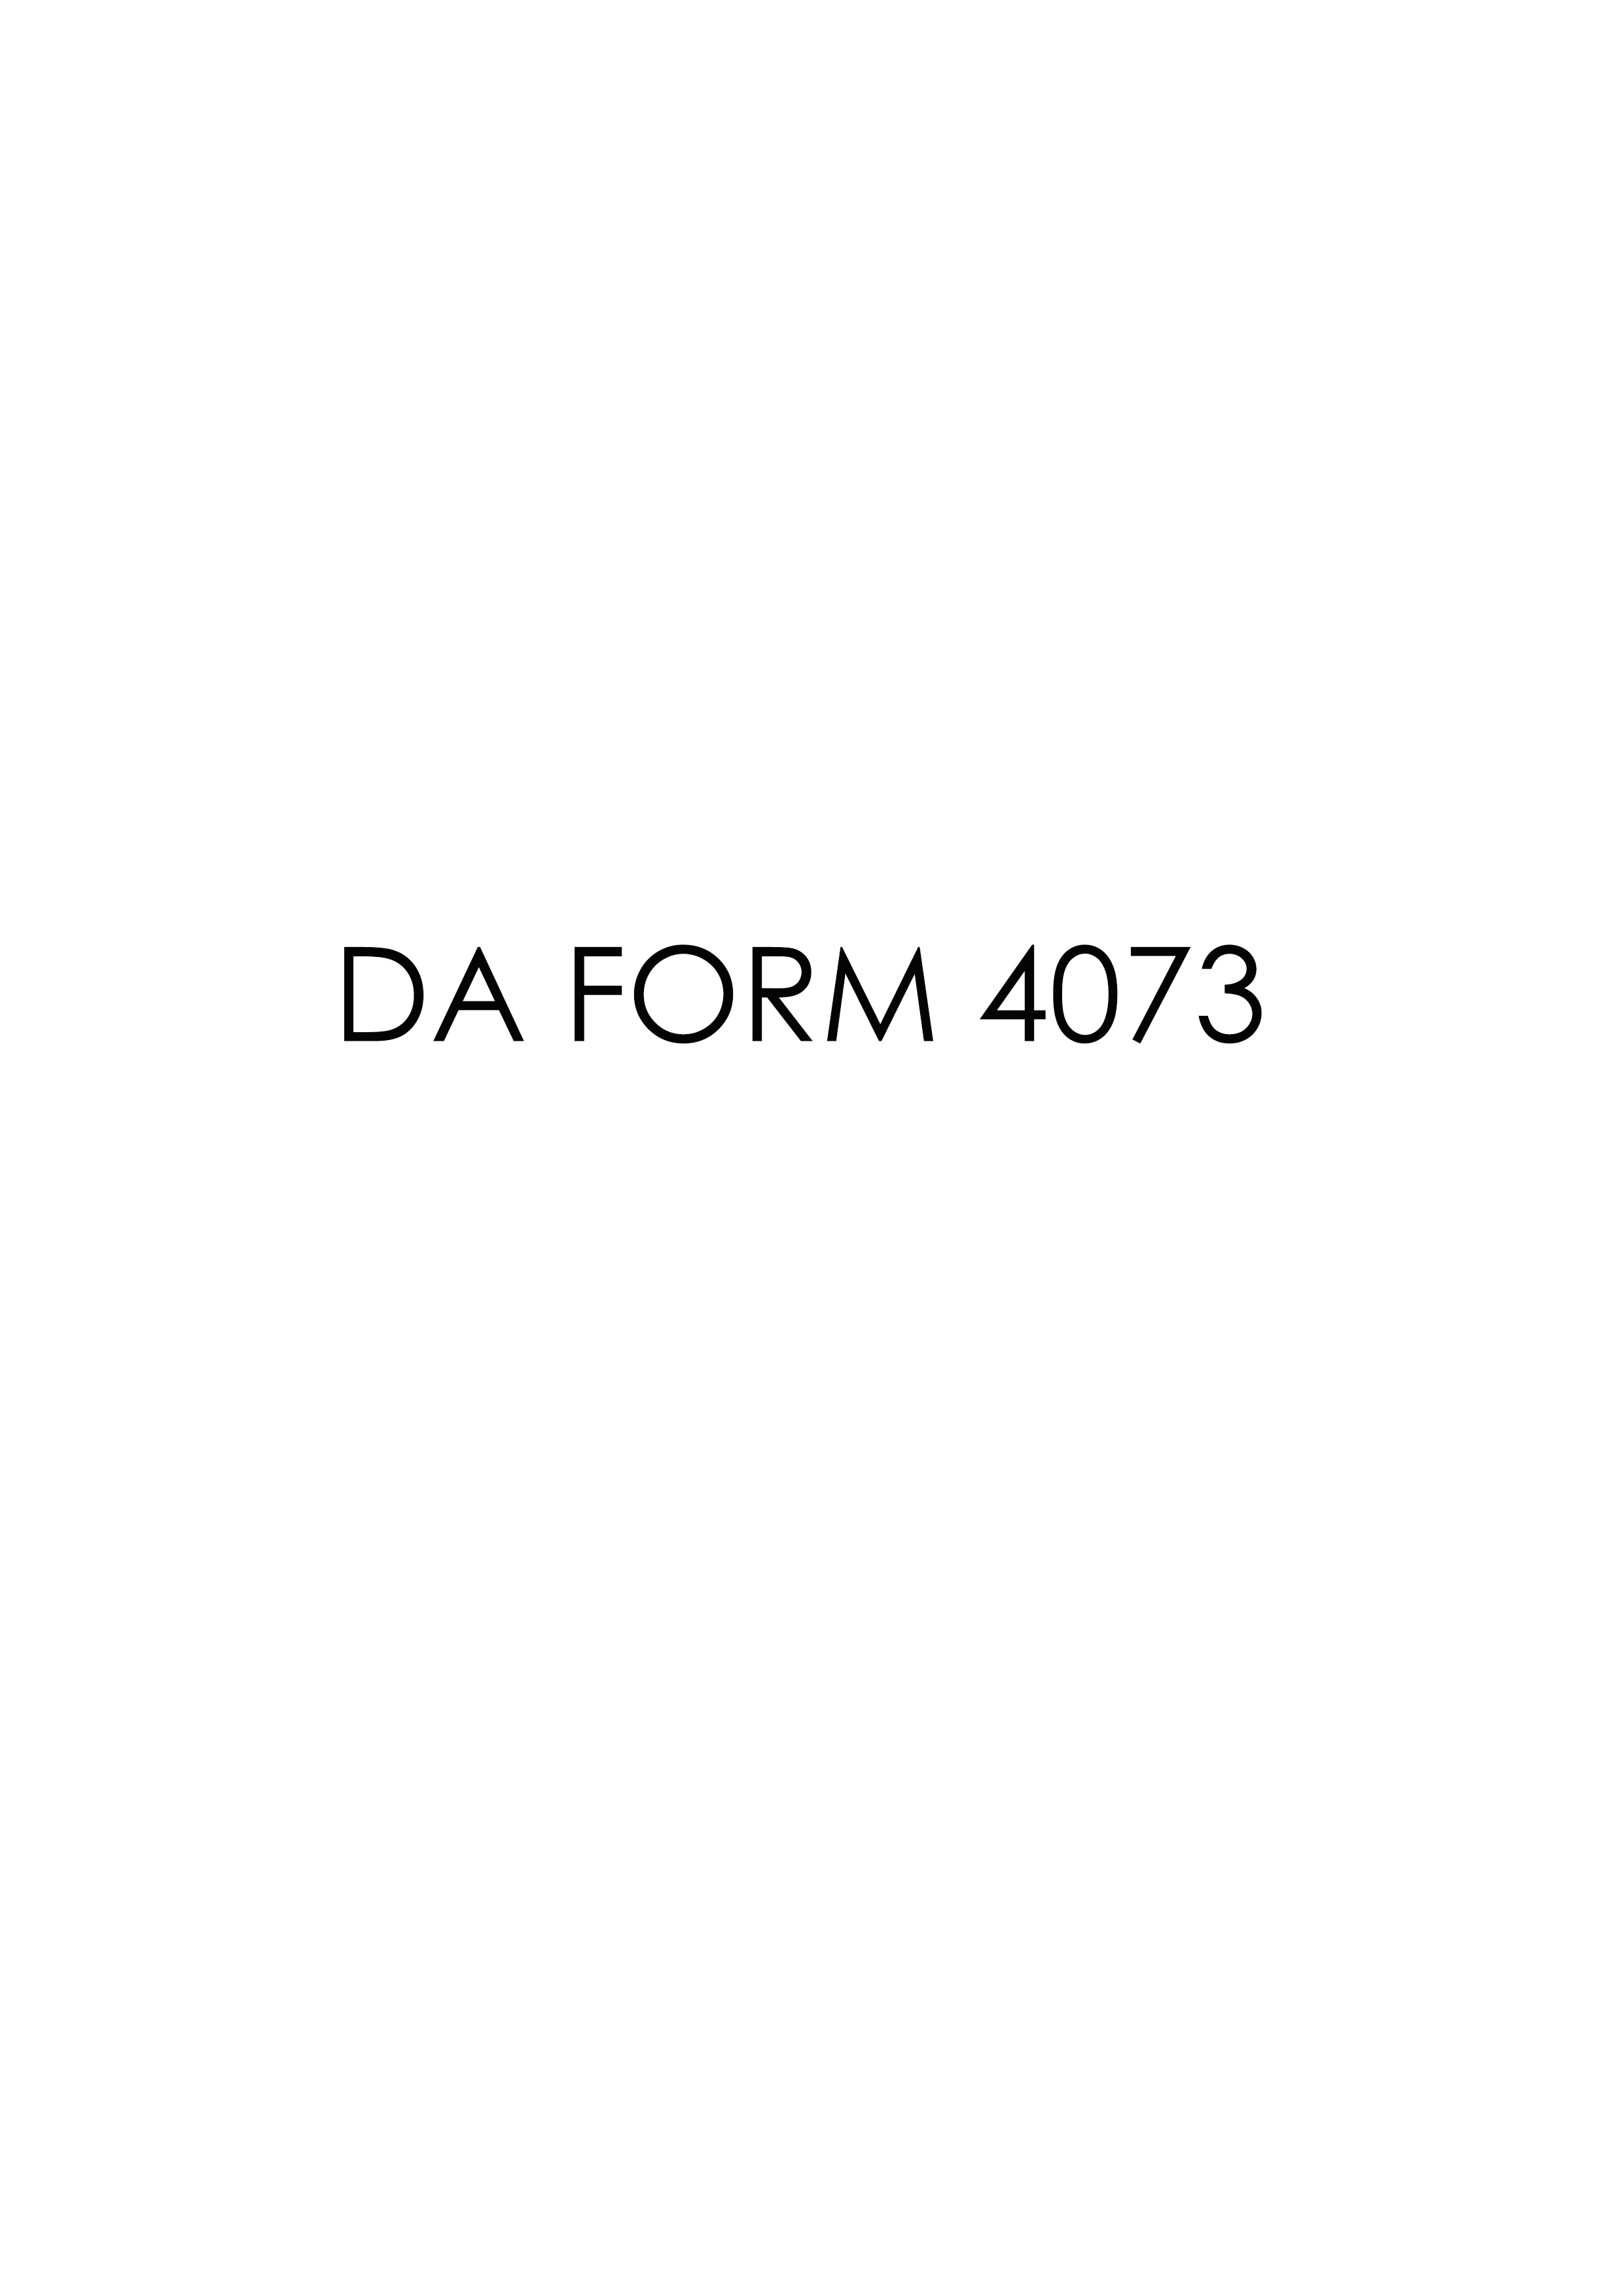 da Form 4073 fillable